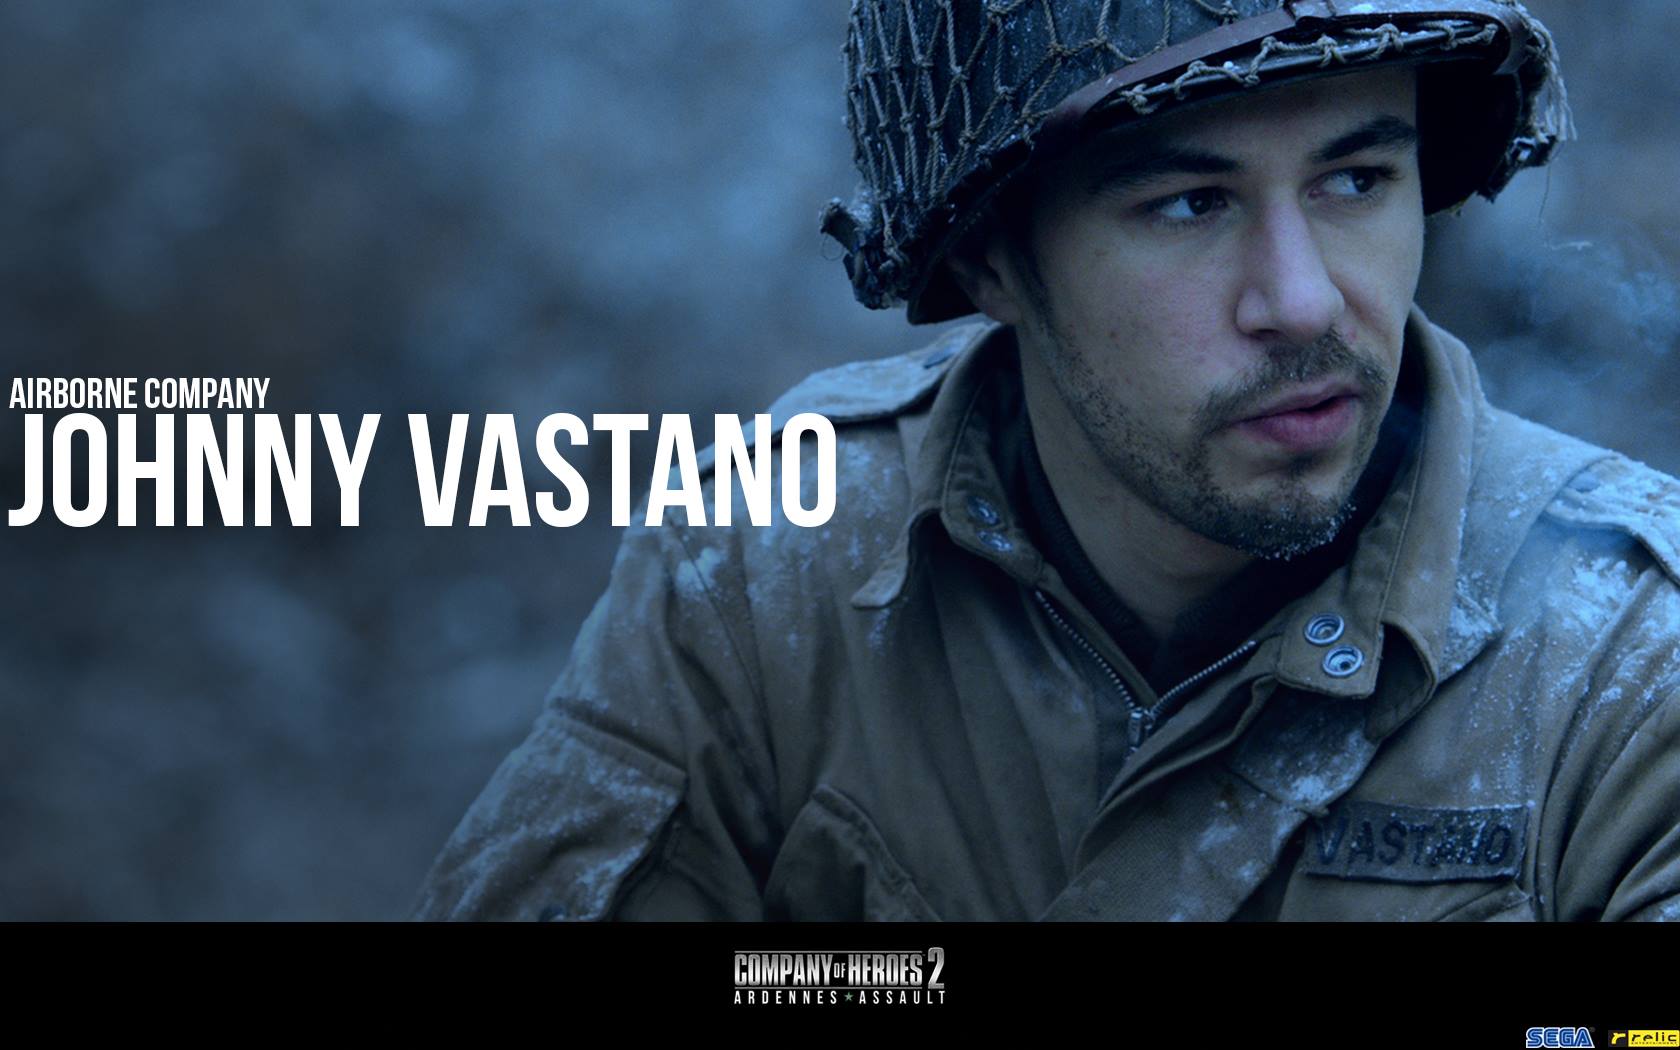 Company of Heroes 2 - Ardennes Assault. Jonathan Alexander as Johnny Vastano